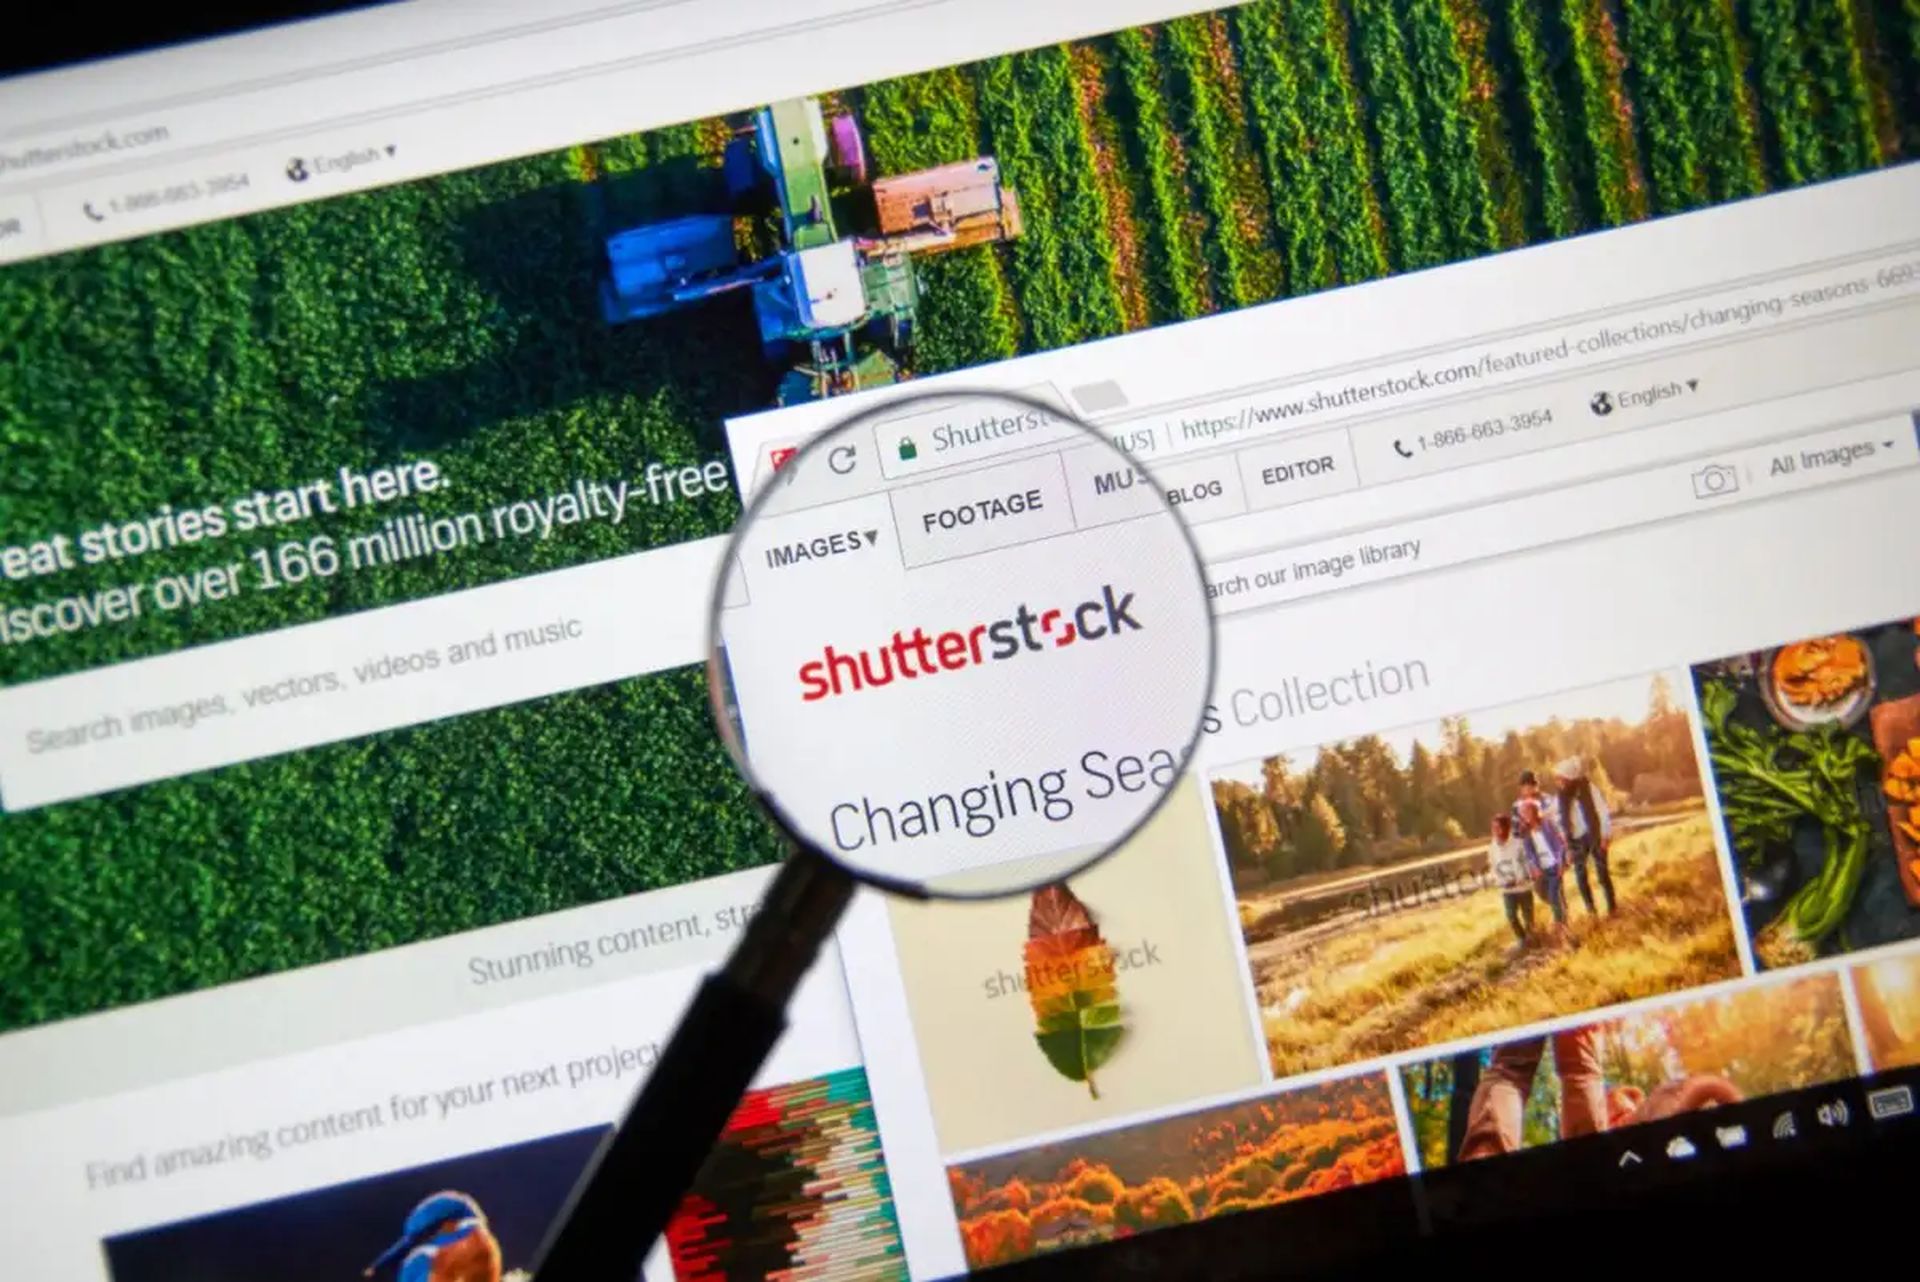 Shutterstock AI Generator